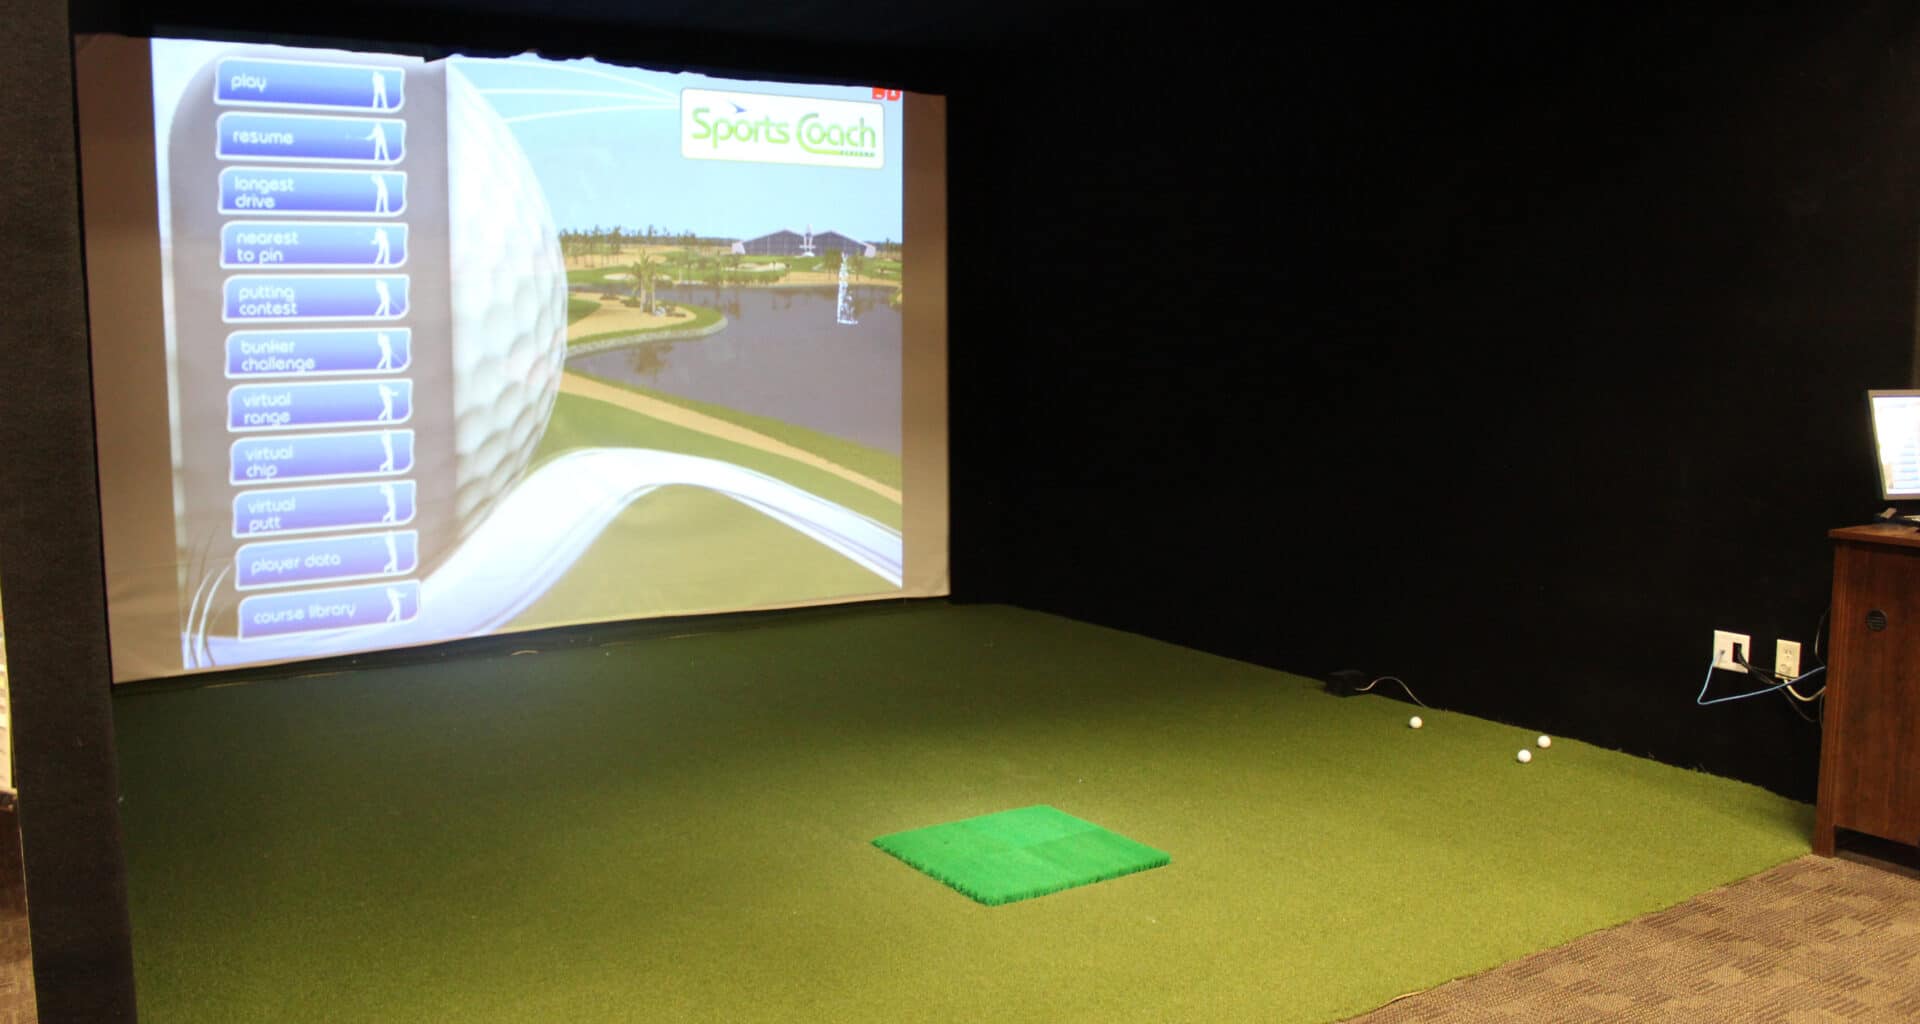 Brau Golf Simulator - Sports Coach